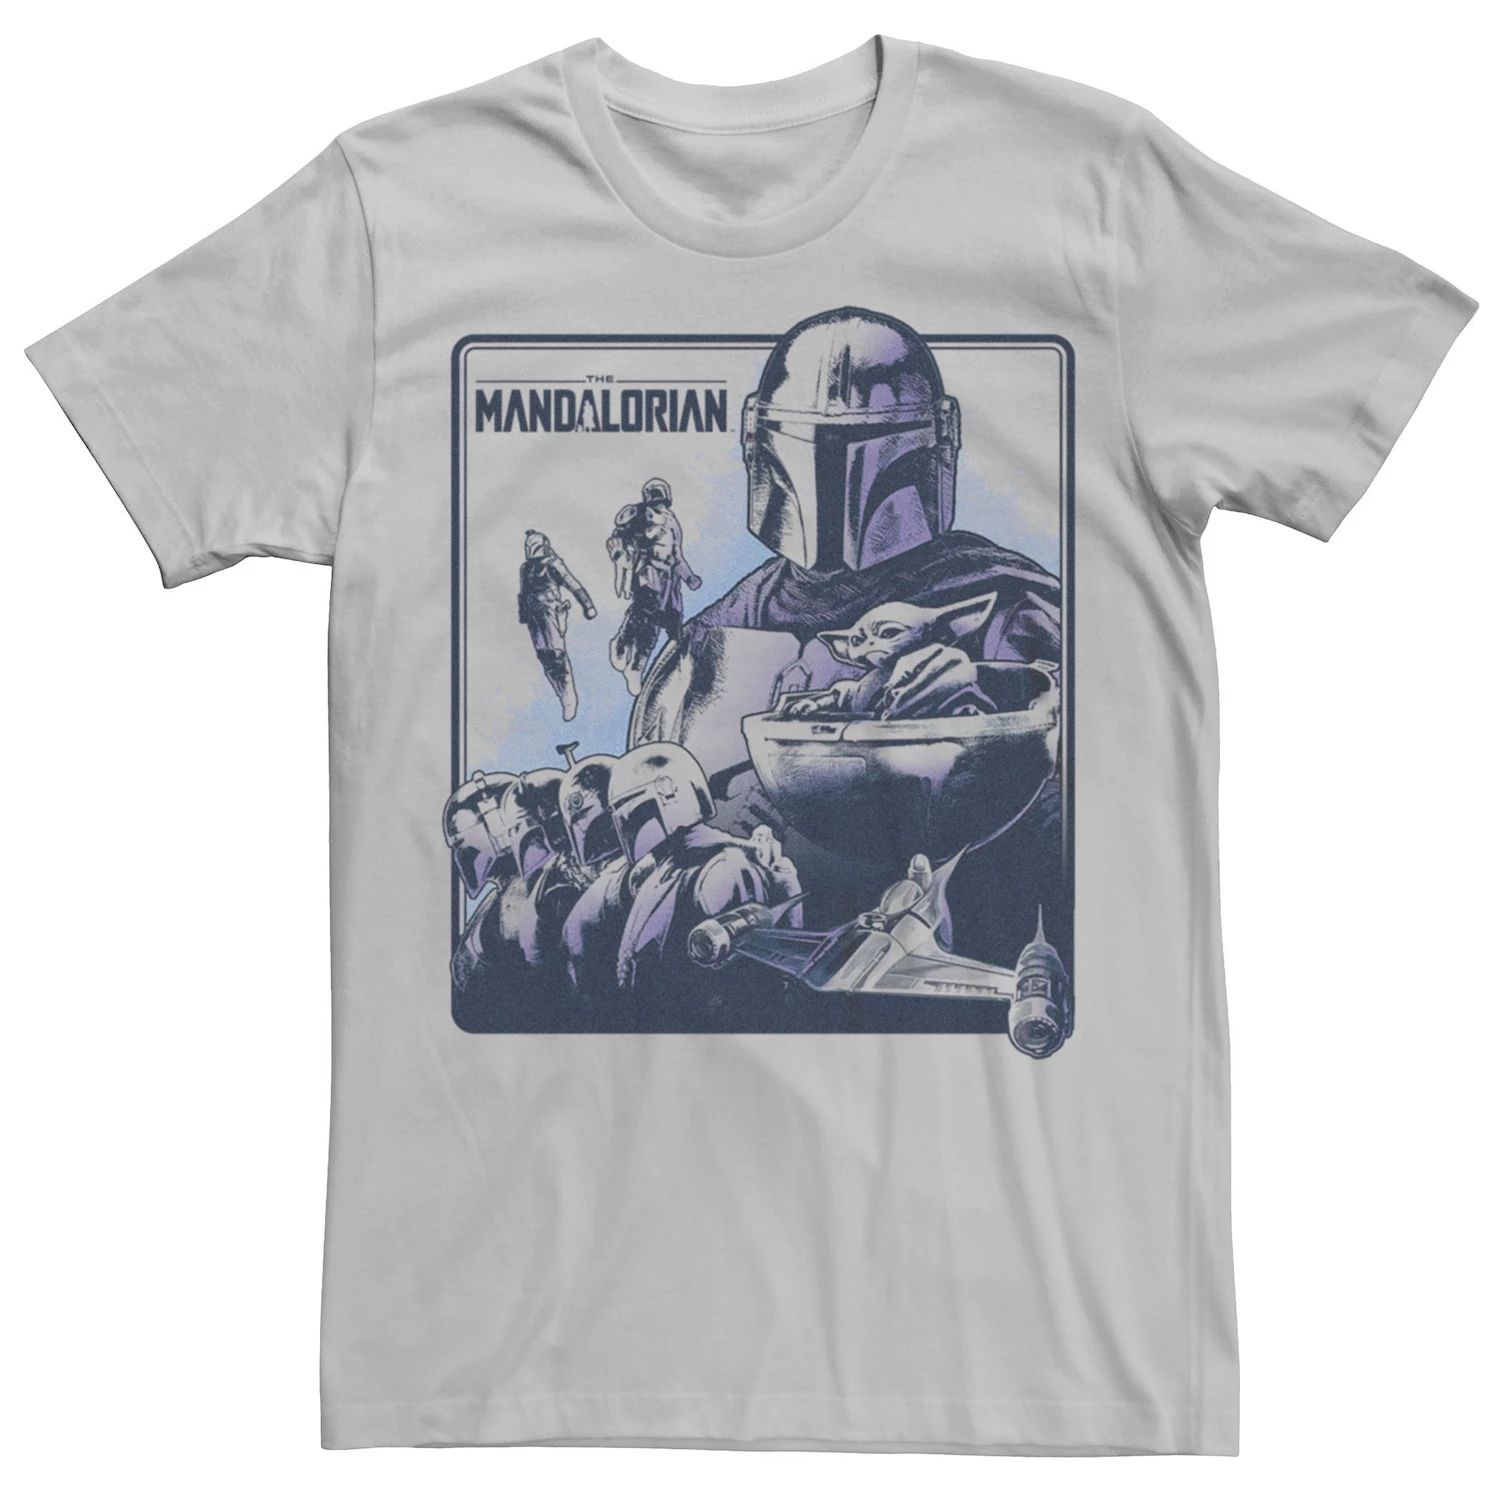 Мужская футболка с коллажем «Звездные войны и мандалорские персонажи» Licensed Character